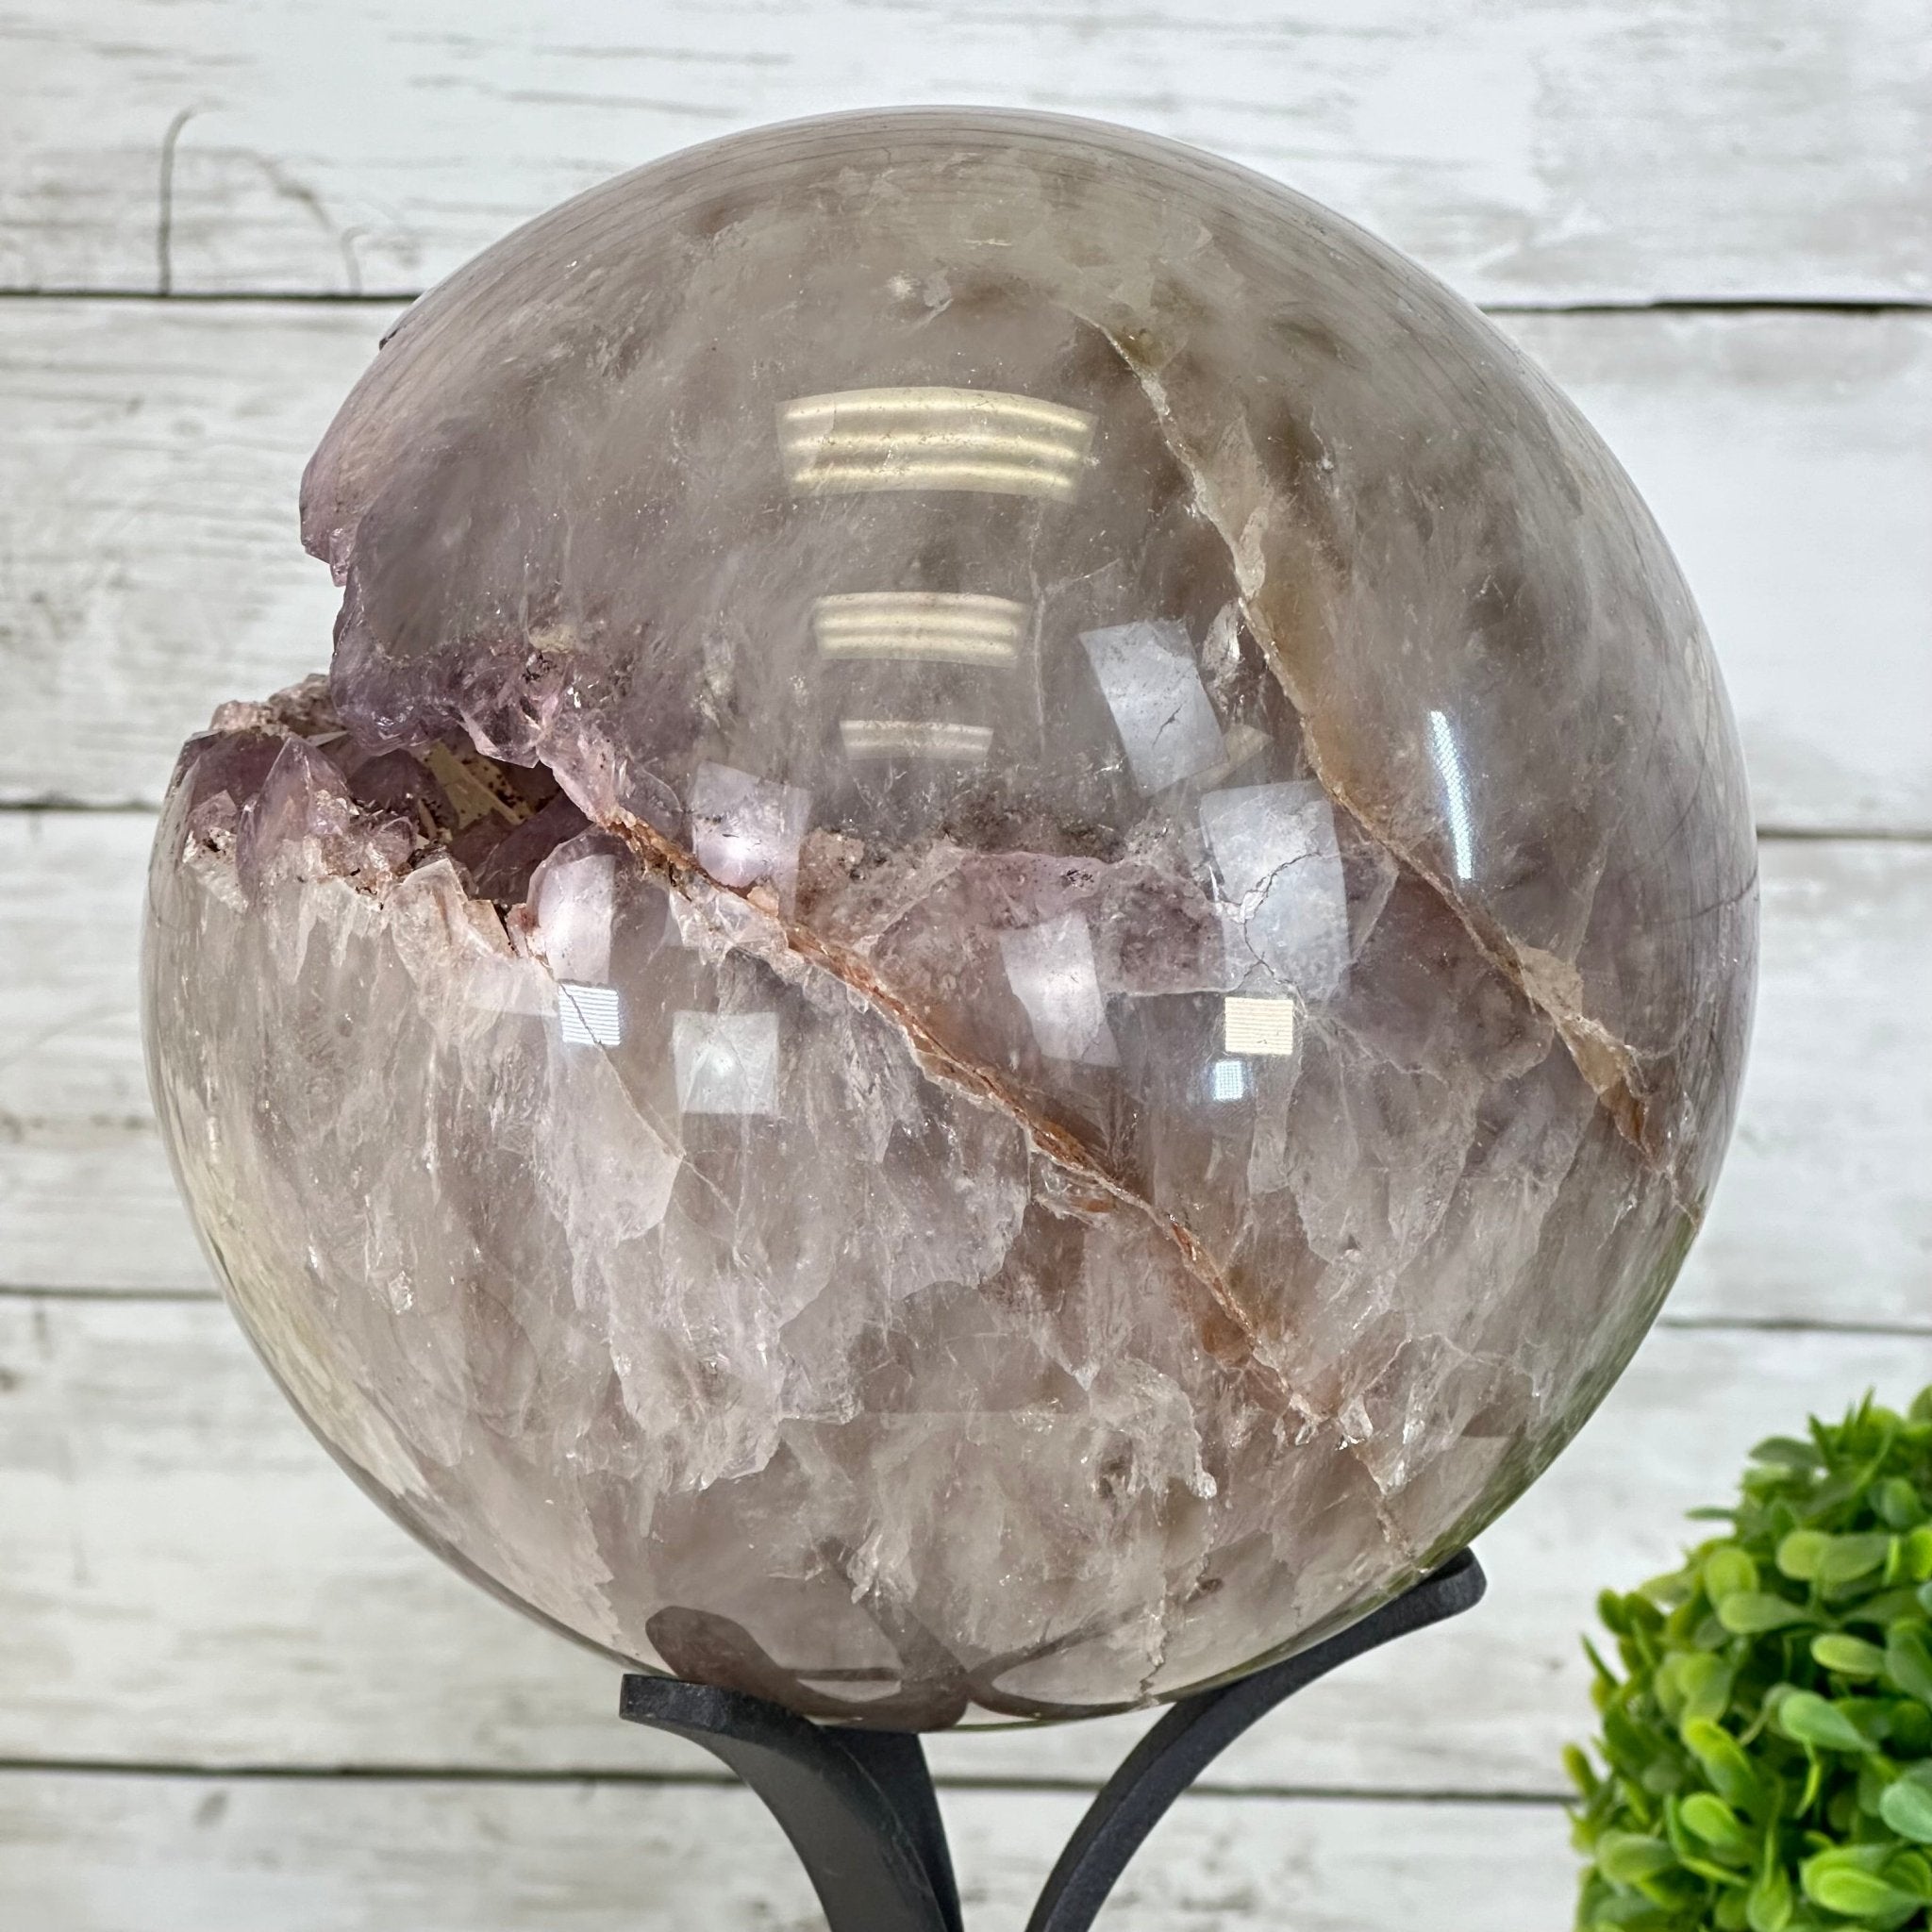 Druzy Amethyst Sphere on a Metal Base, 11 lbs & 12.2" Tall #5630-0074 - Brazil GemsBrazil GemsDruzy Amethyst Sphere on a Metal Base, 11 lbs & 12.2" Tall #5630-0074Spheres5630-0074